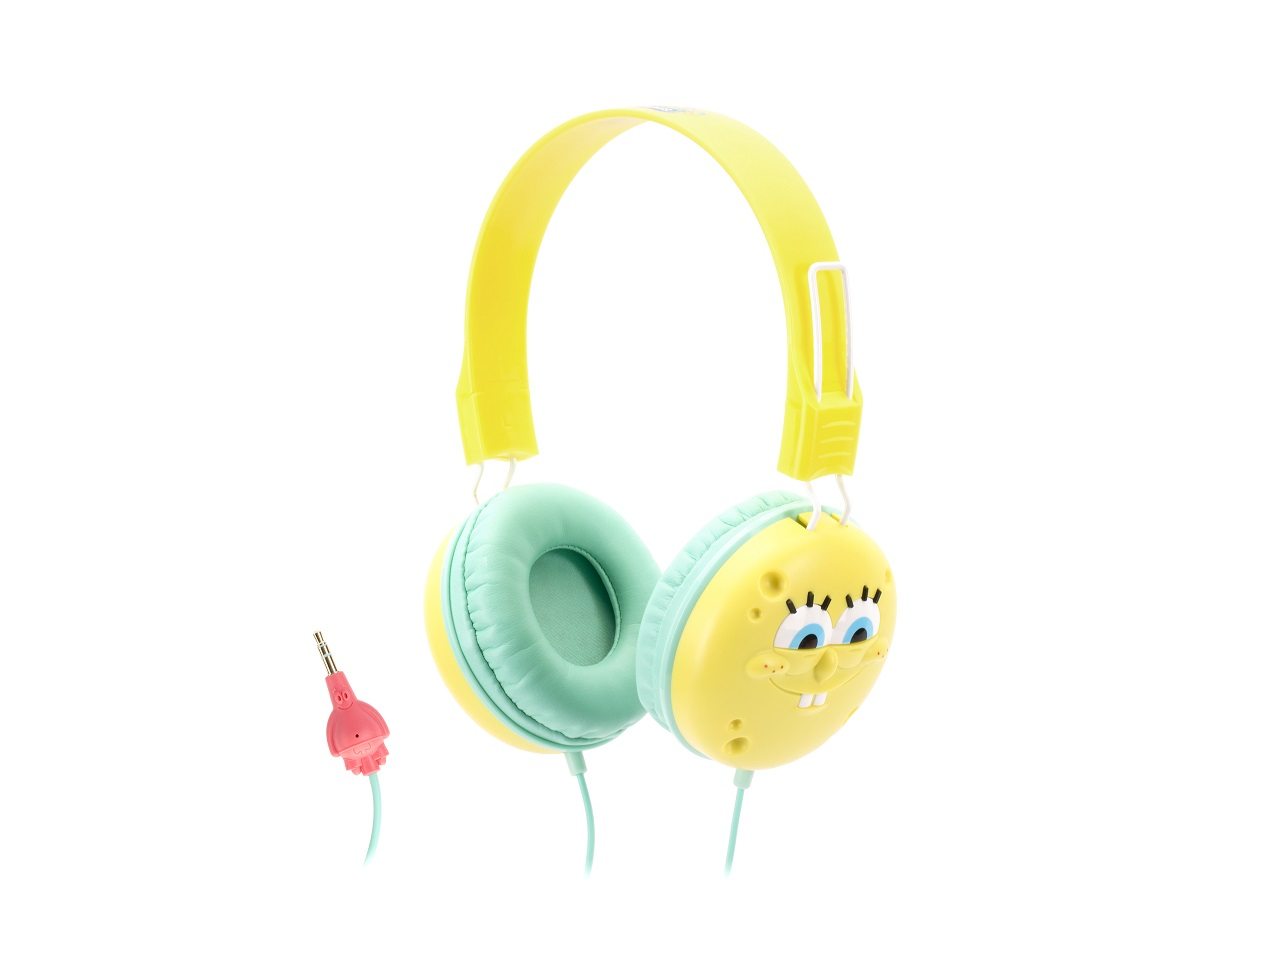 For Ages 8-12: SpongeBob SquarePants Headphones